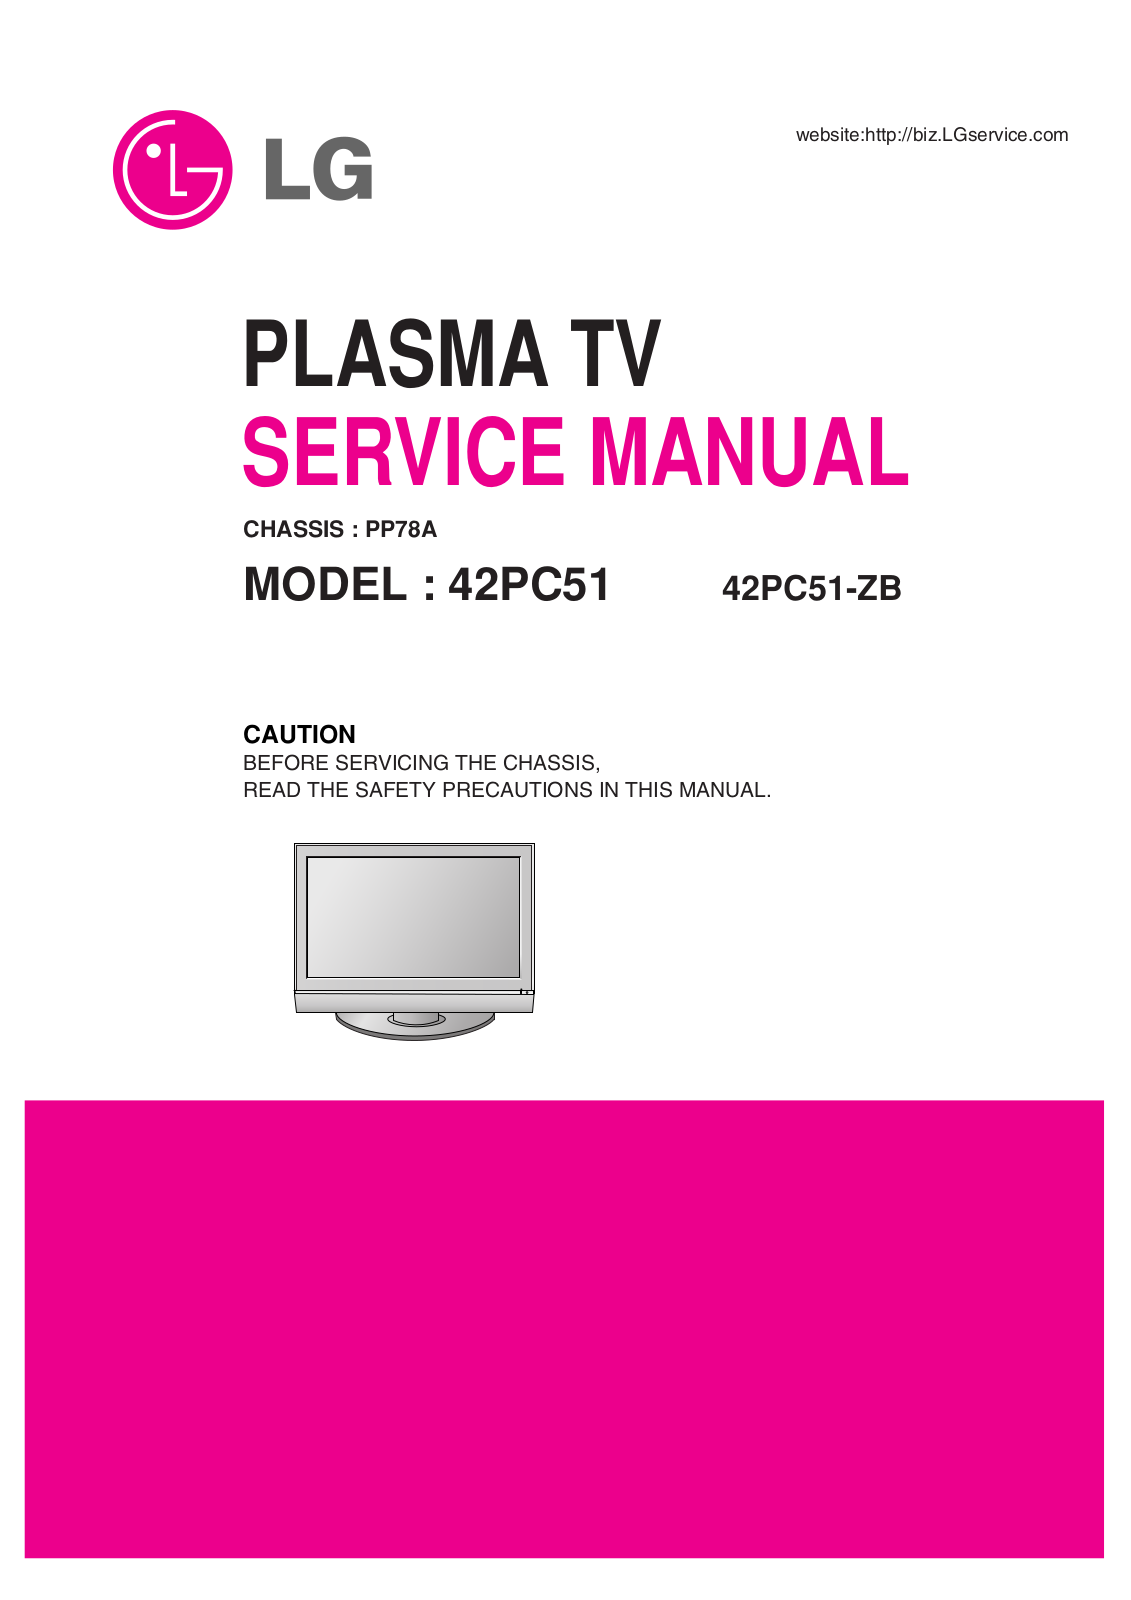 LG 42PC51, 42PC51-ZB Service Manual